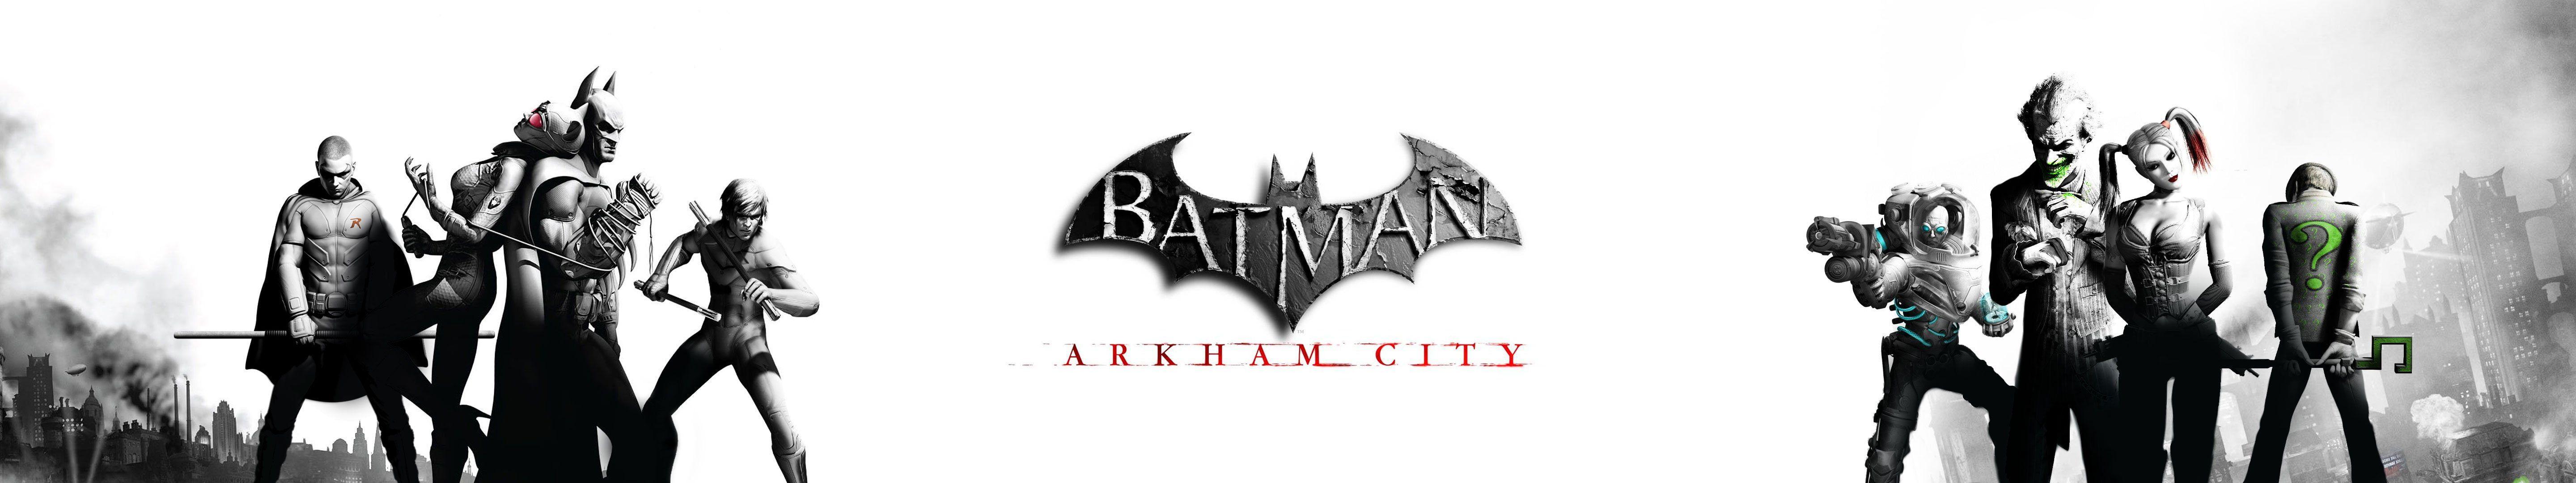 Arkham Batman City Film Monitors Movie Multi Multiple